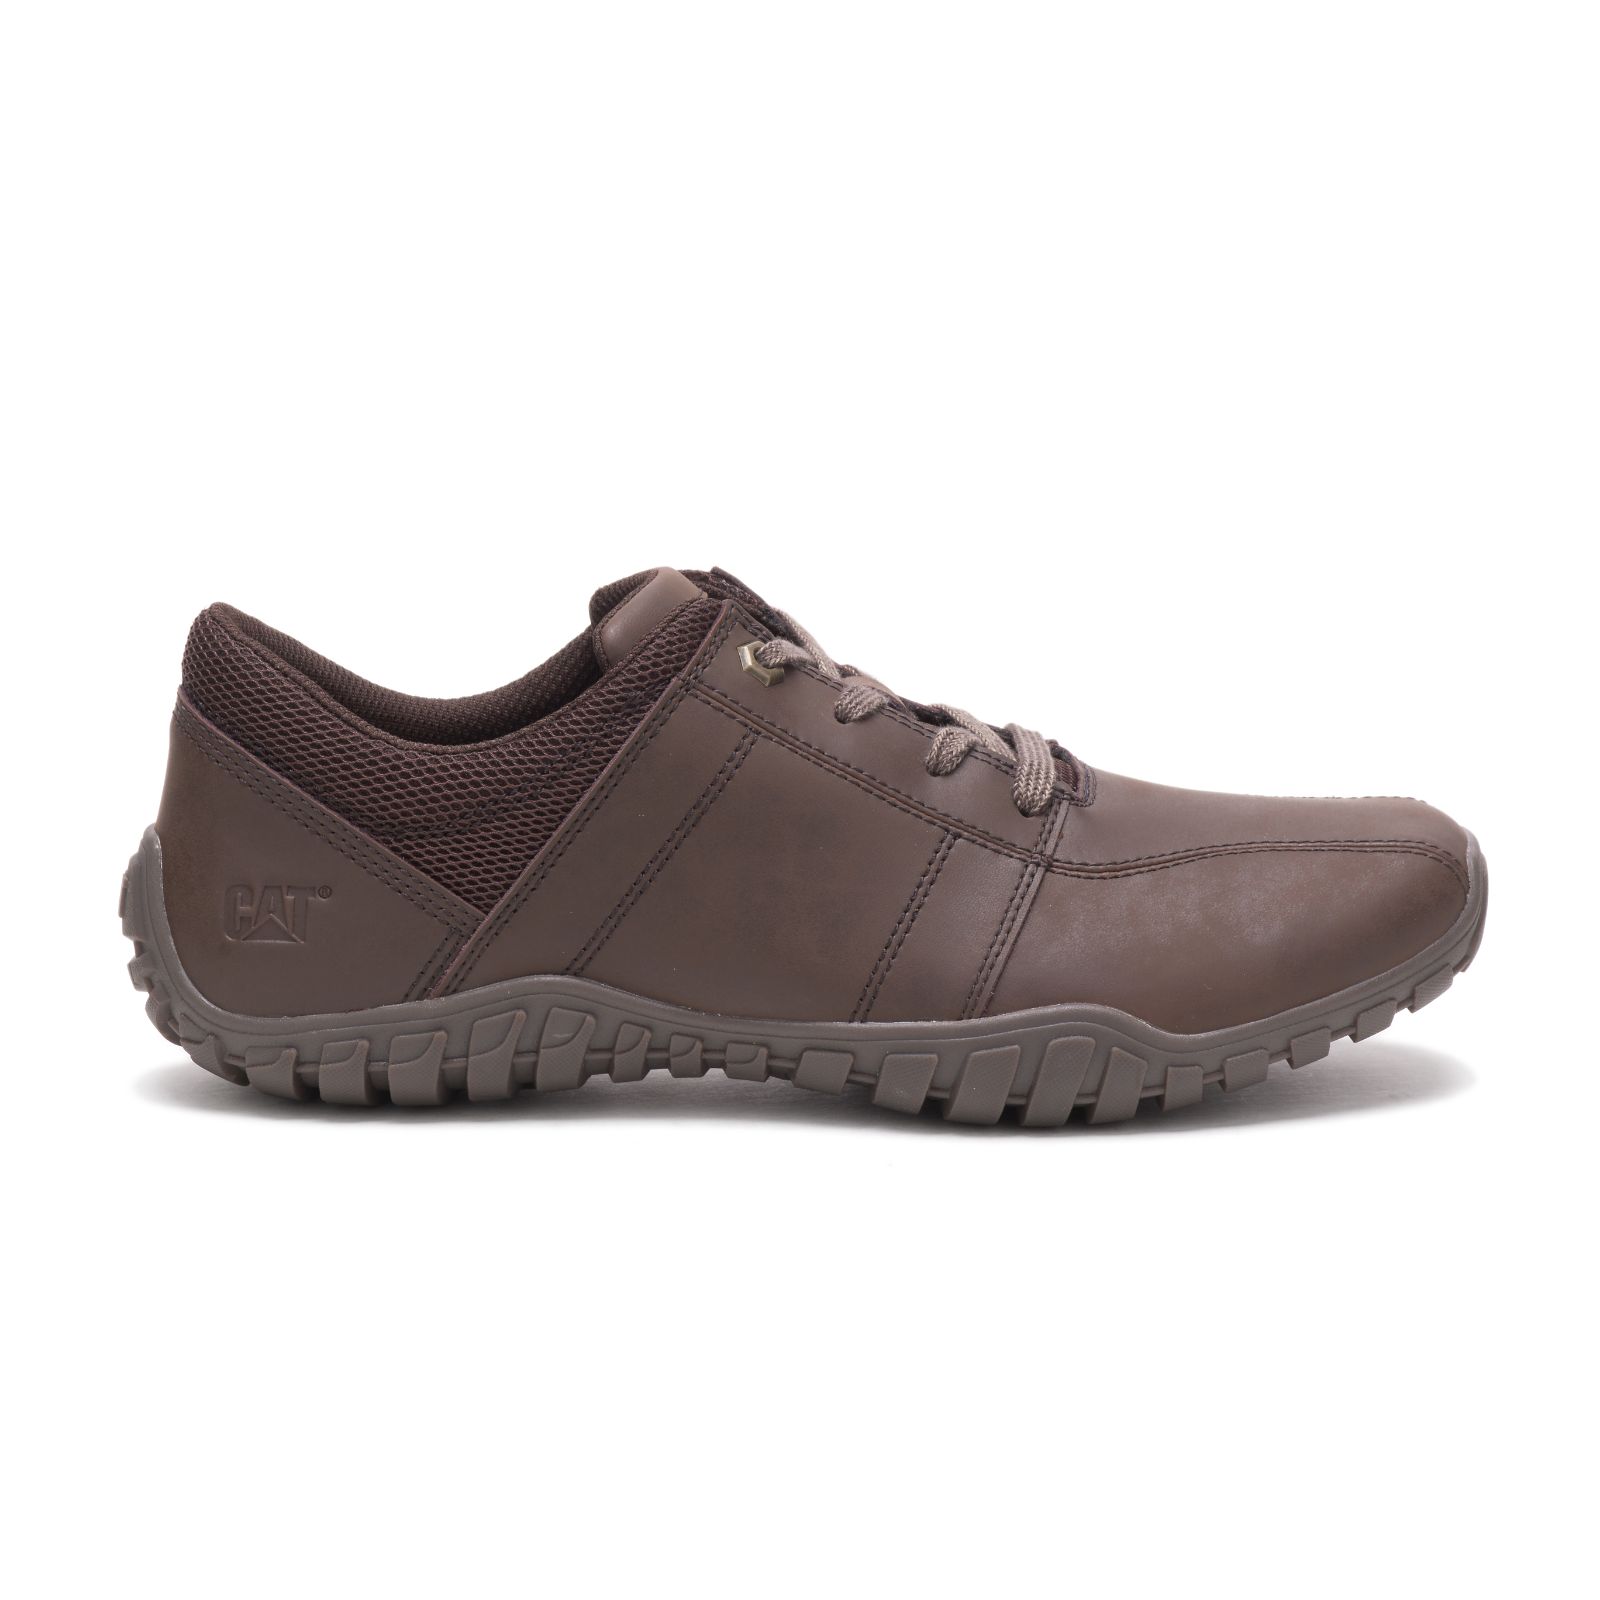 Caterpillar Gus - Mens Casual Shoes - Chocolate - NZ (957IAXWUS)